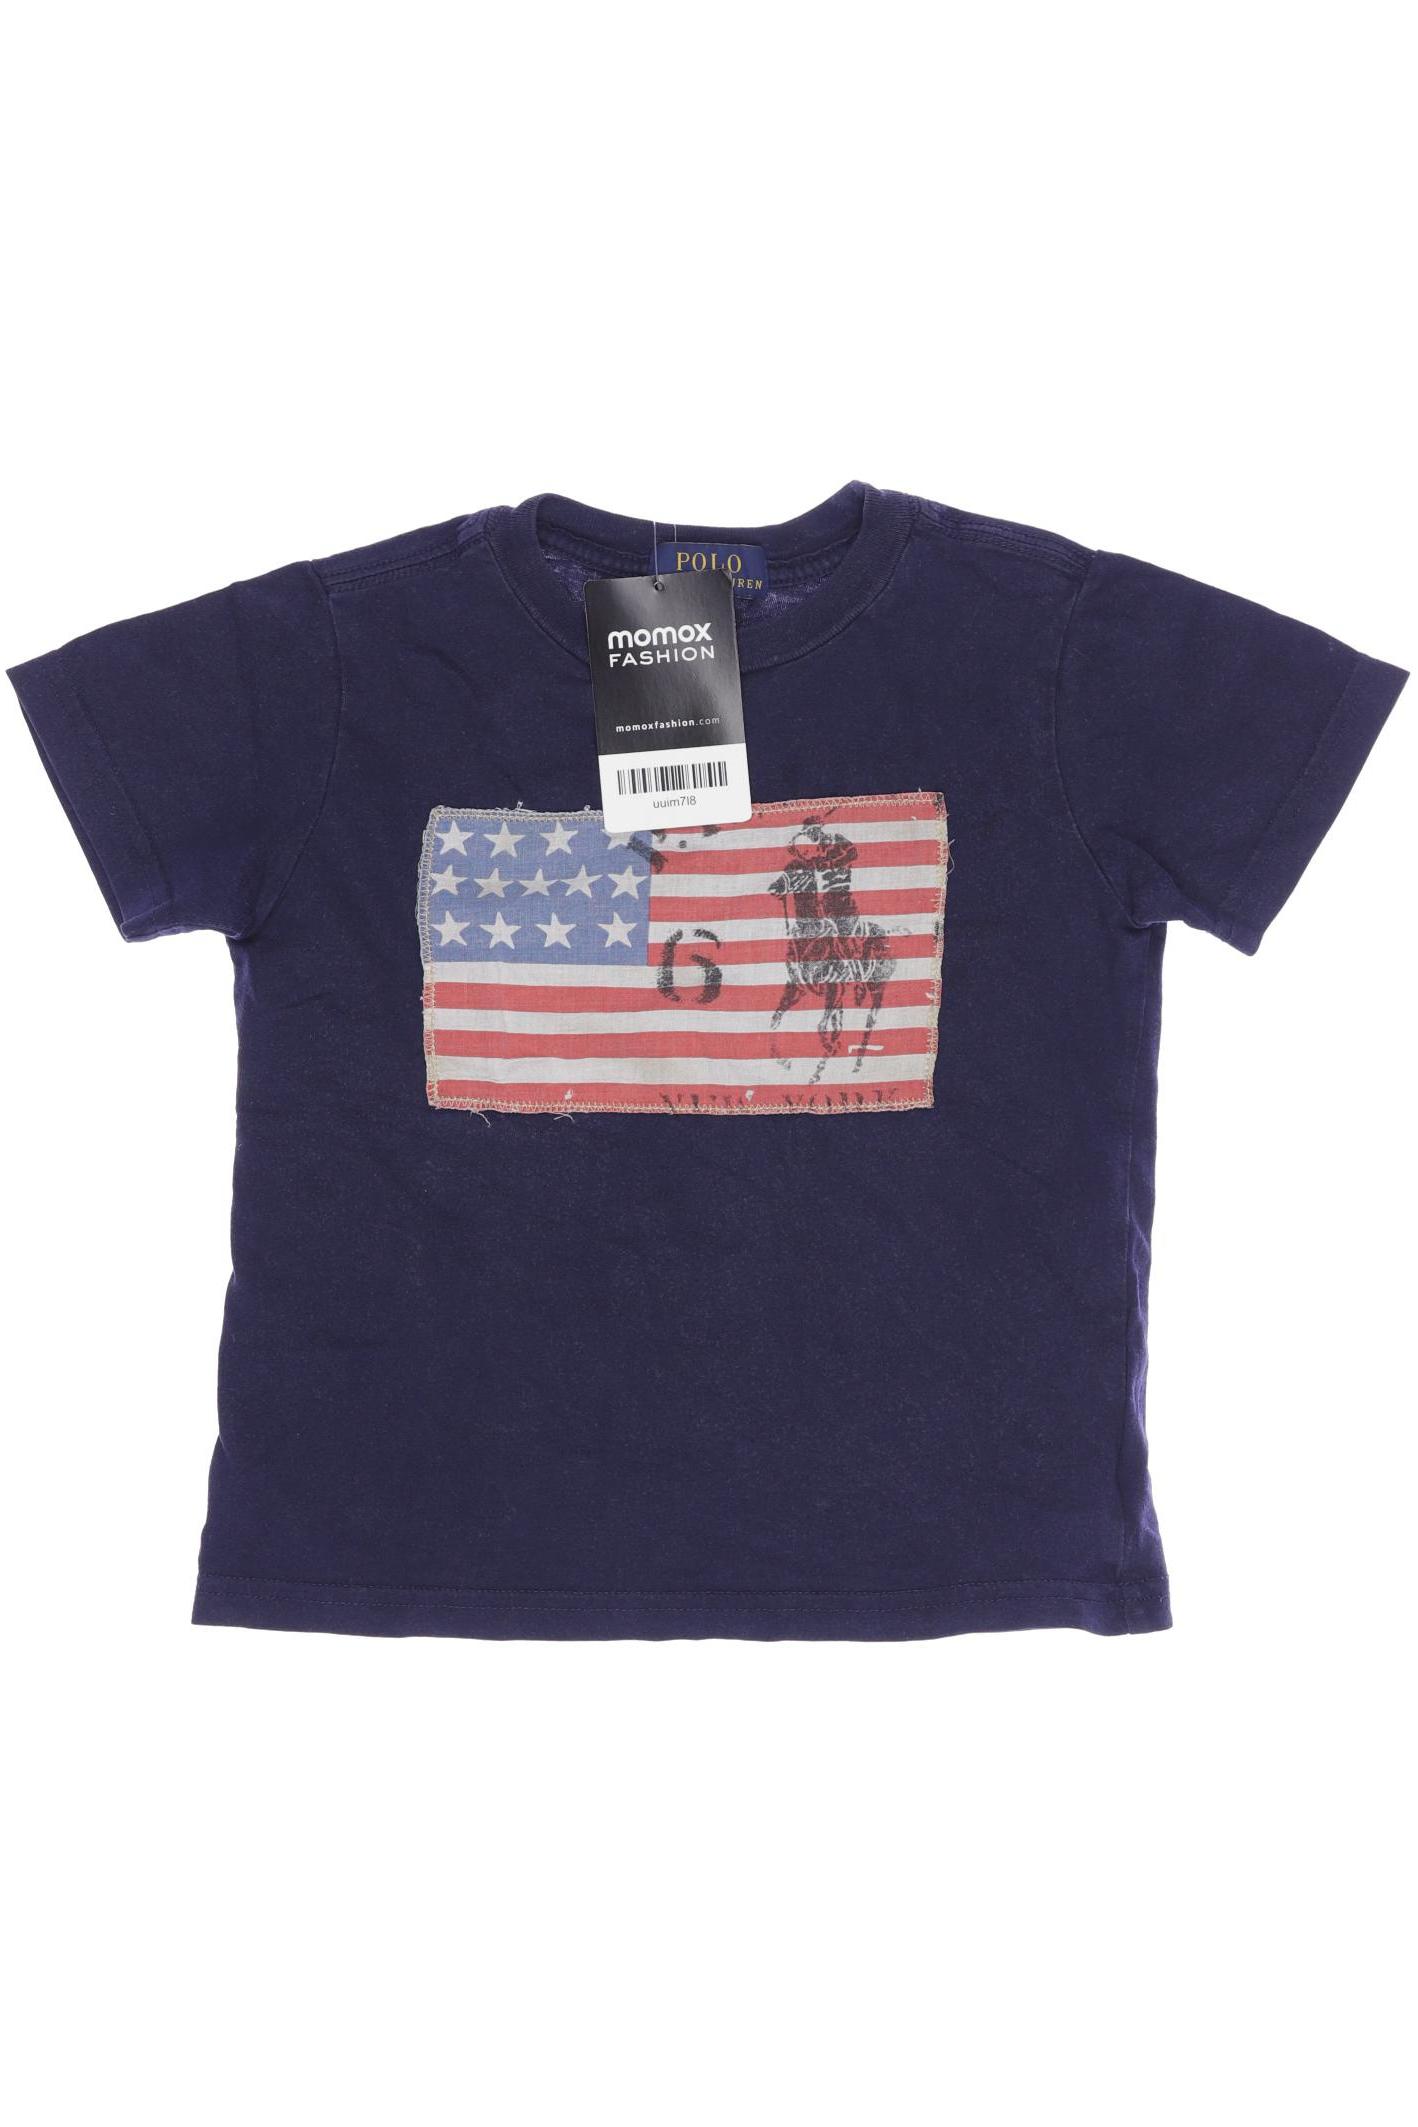 Polo Ralph Lauren Jungen T-Shirt, marineblau von Polo Ralph Lauren